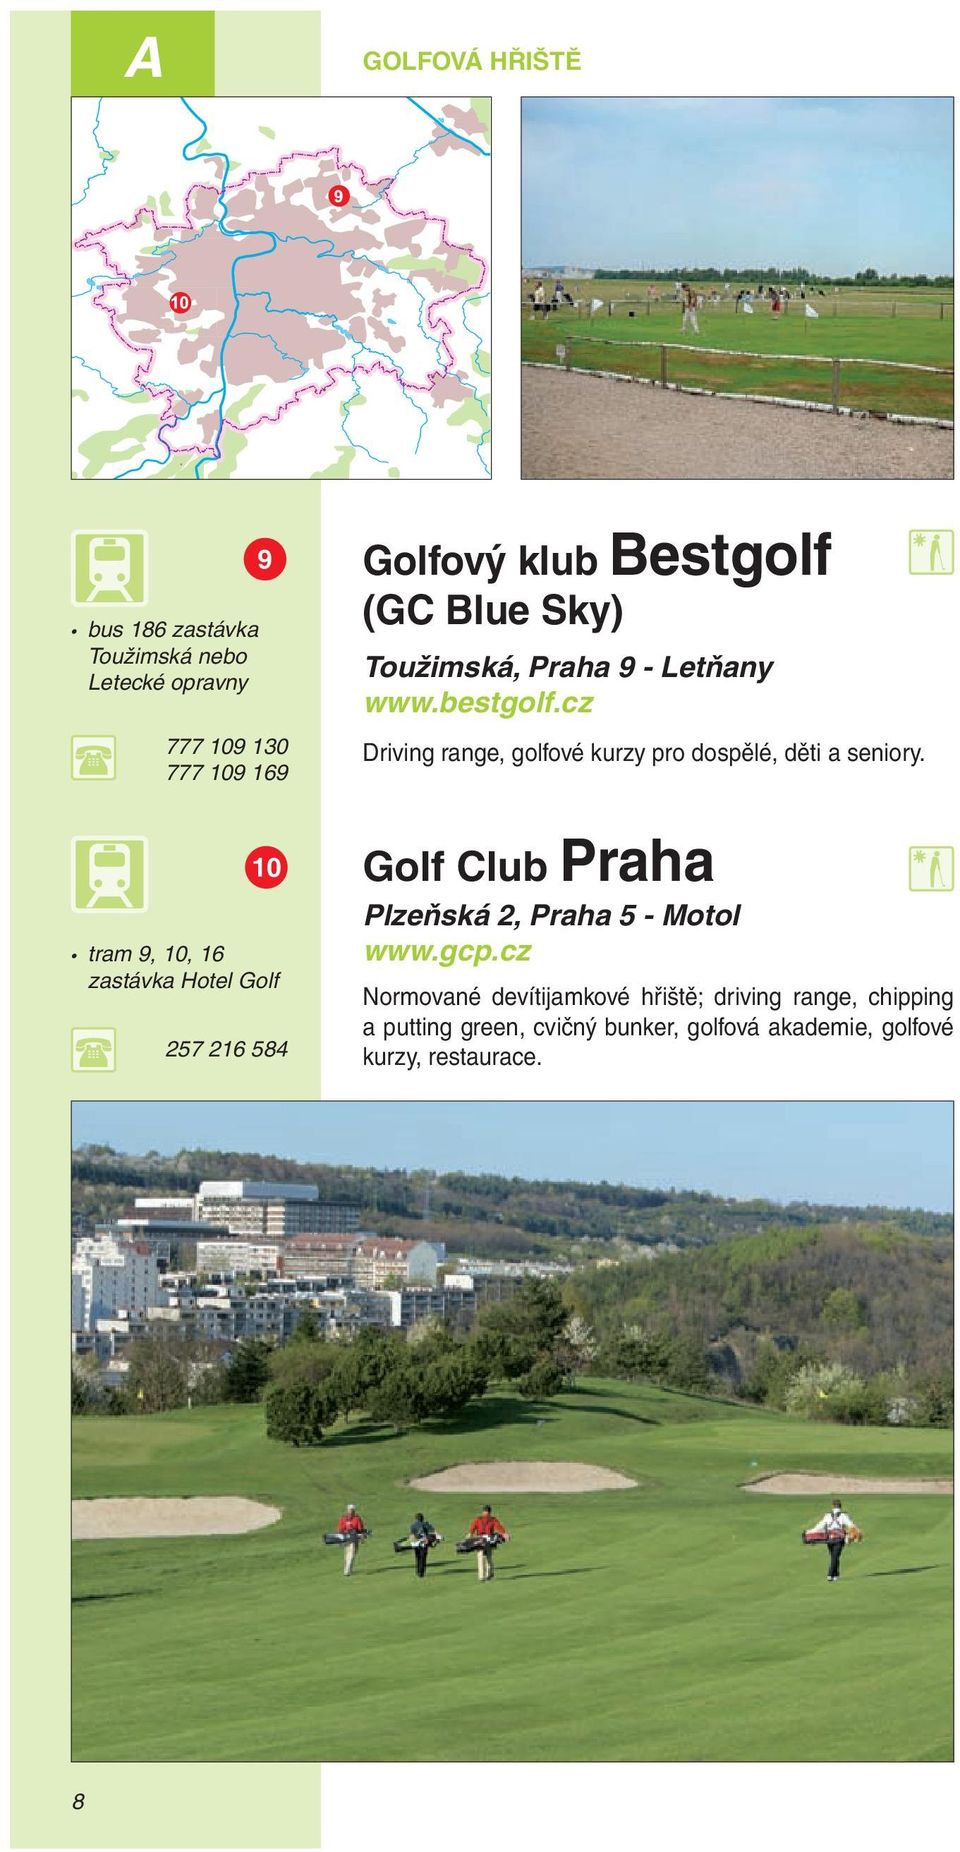 10 tram 9, 10, 16 zastávka Hotel Golf 257 216 584 Golf Club Praha Plzeňská 2, Praha 5 - Motol www.gcp.